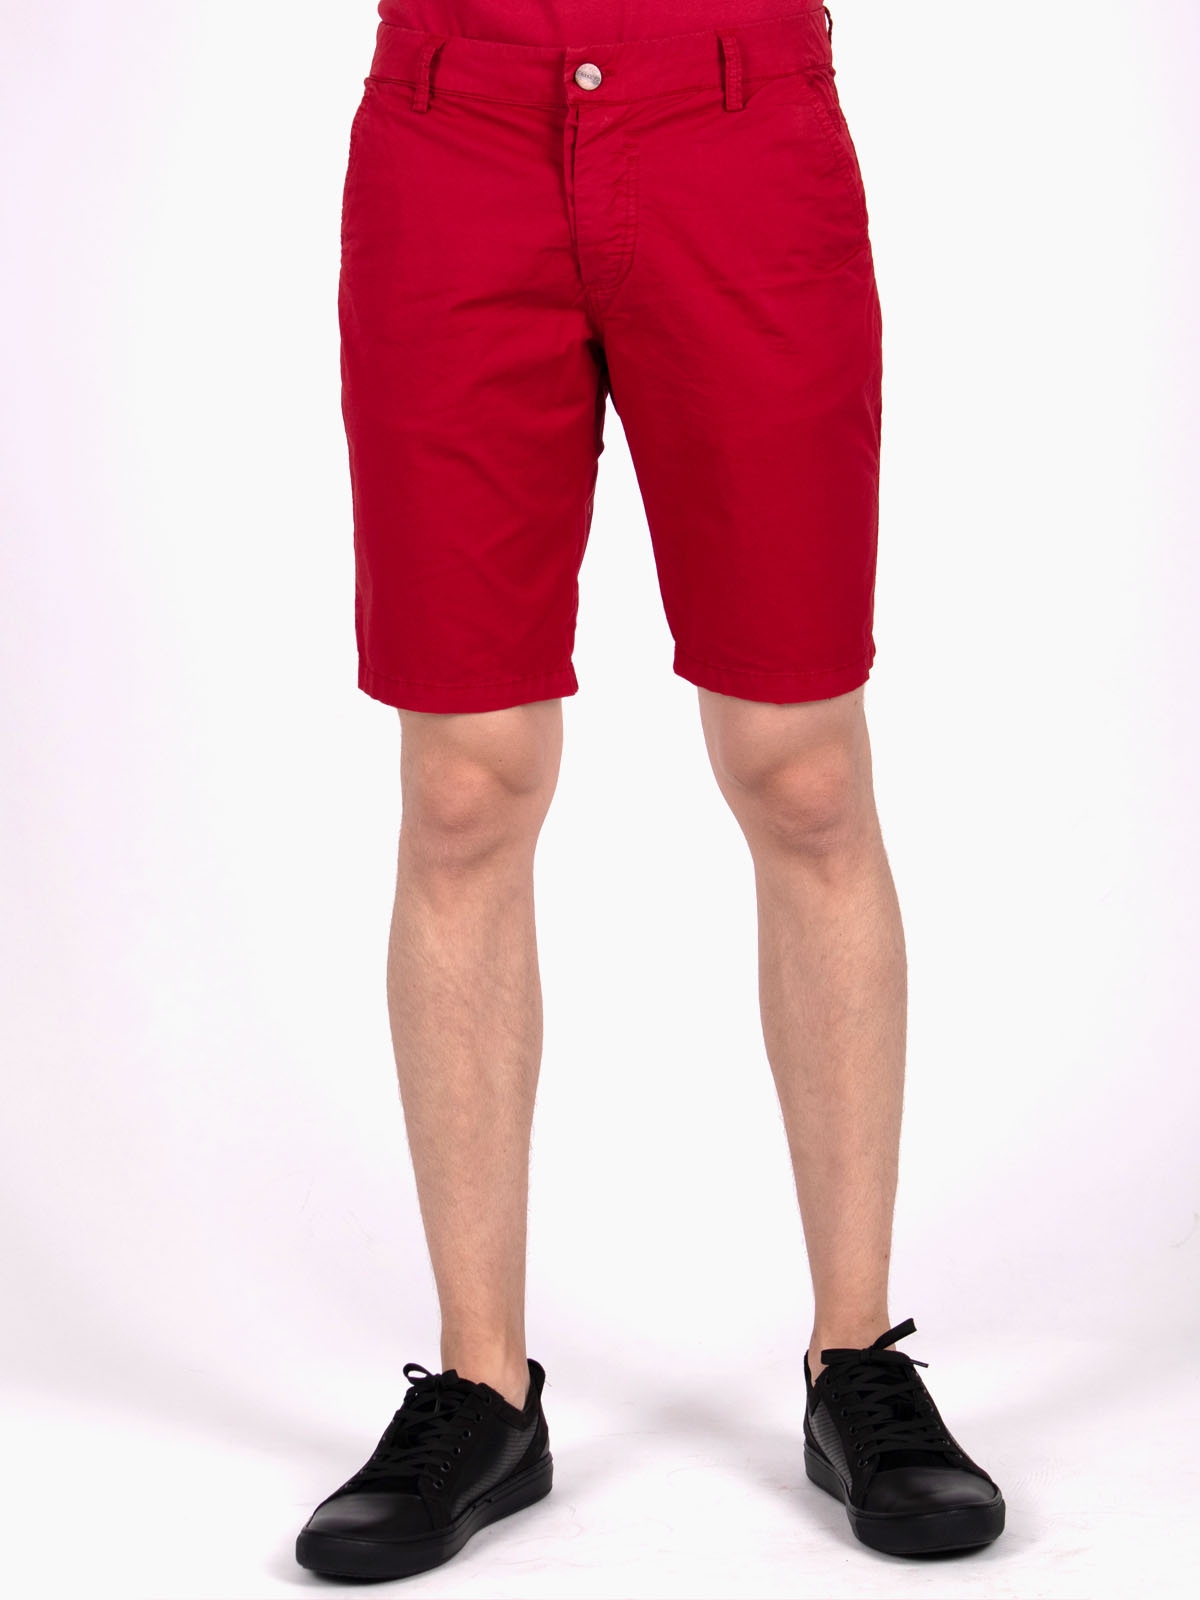  pantaloni scurți roșii  - 67062 € 27.00 img2